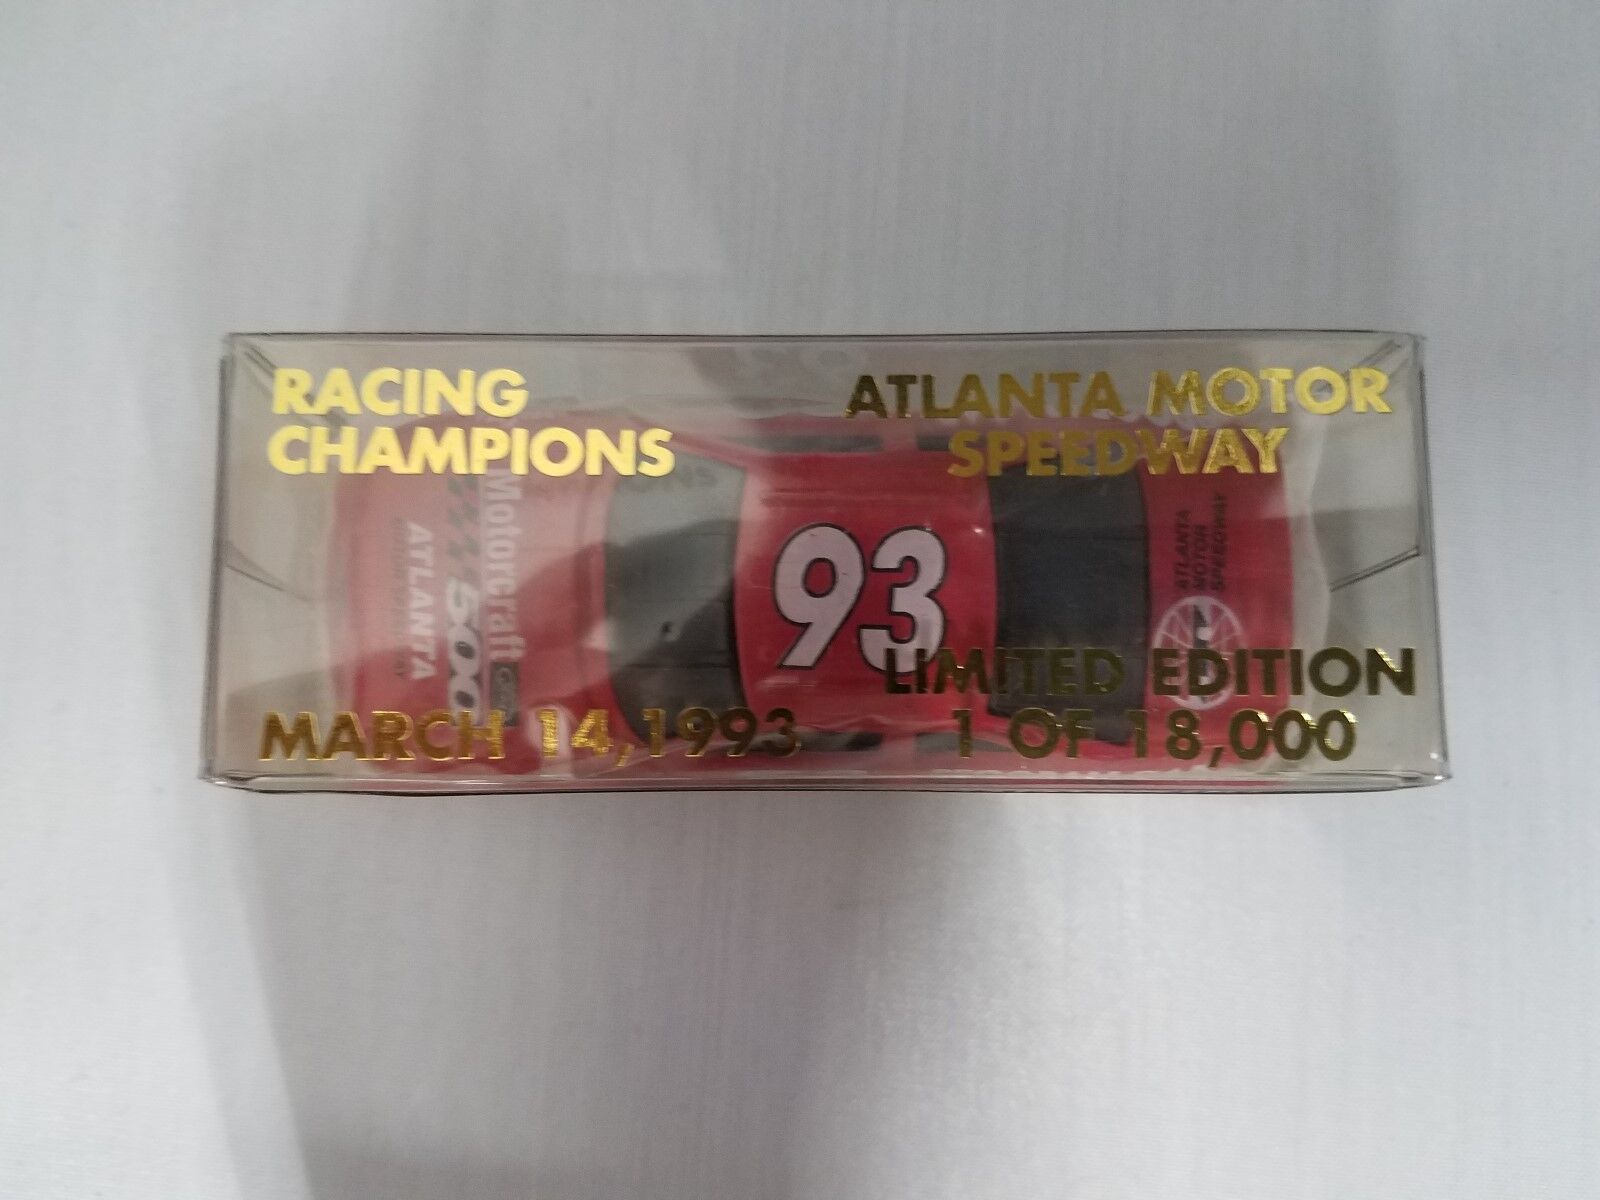 Racing Champions Program Car 93 Atlanta Motor Speedway March 14, 1993